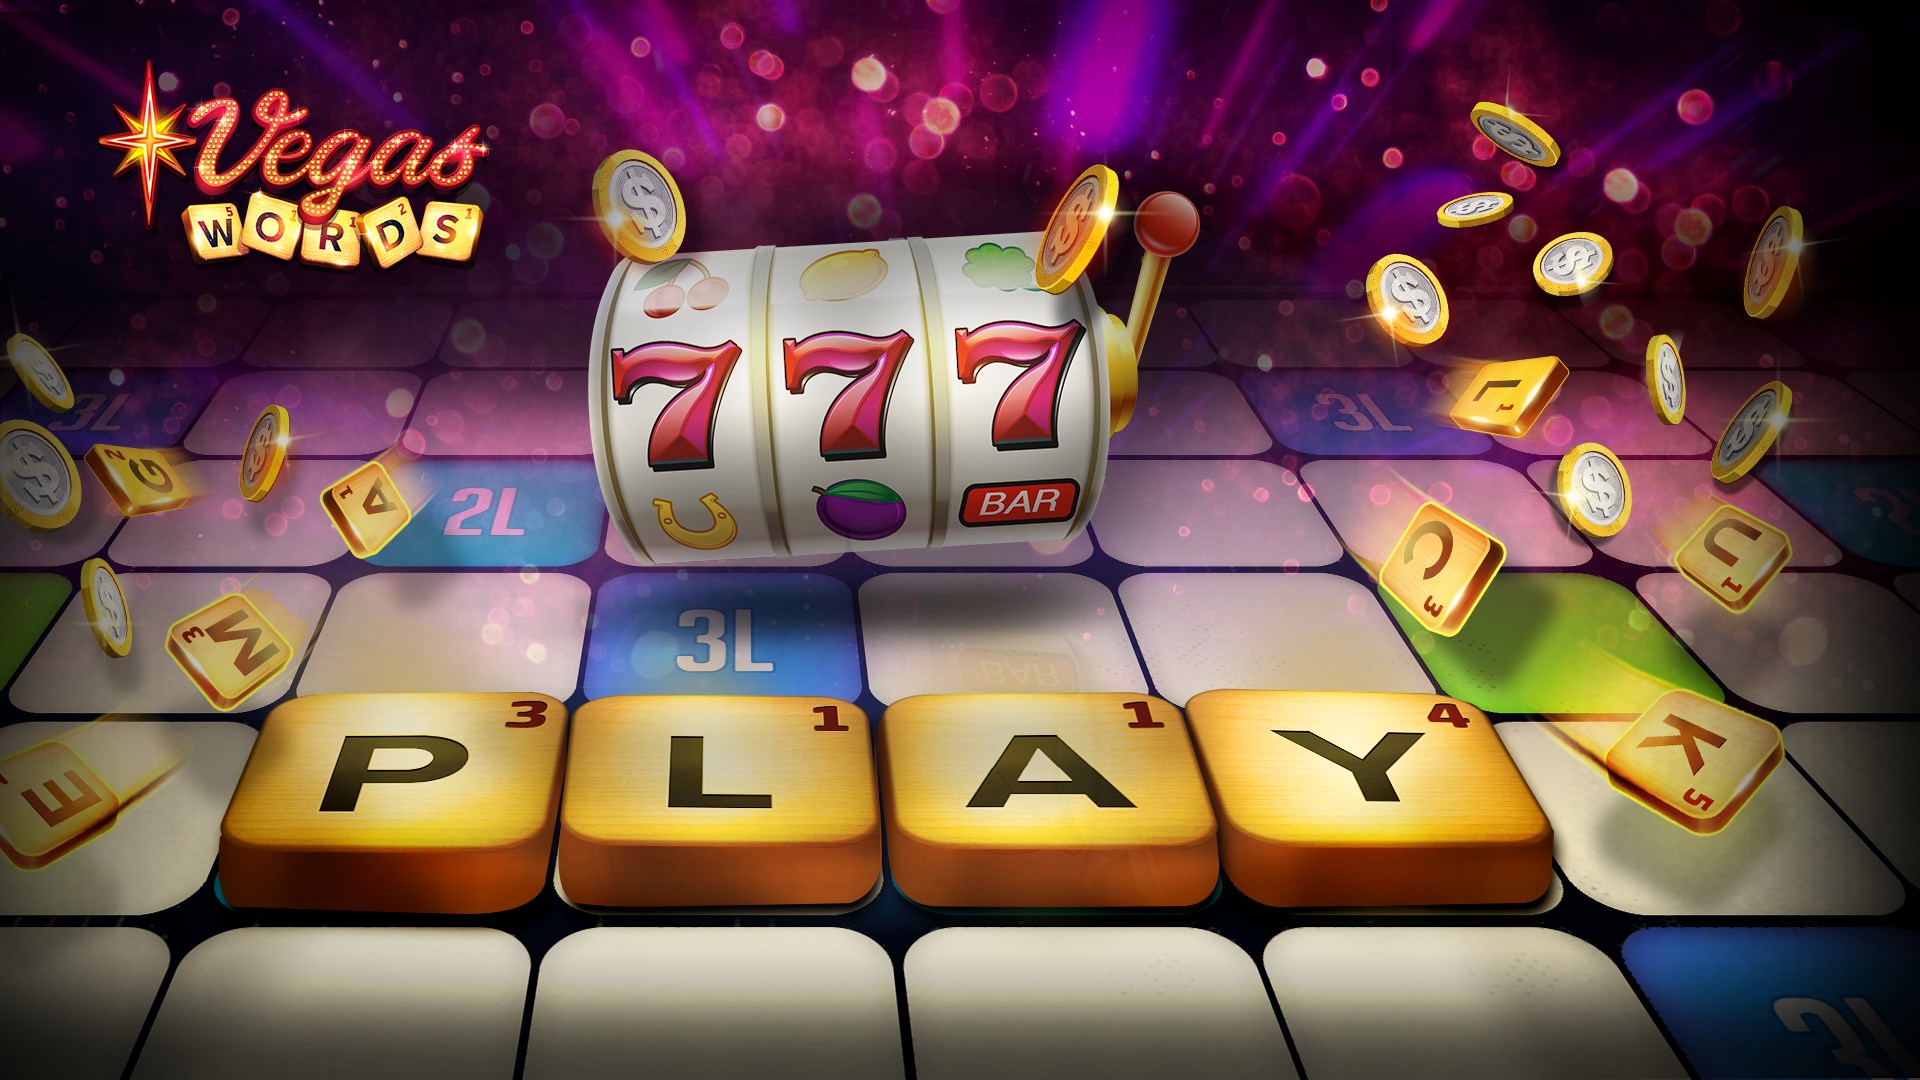 Casino slots vegas world free play 21